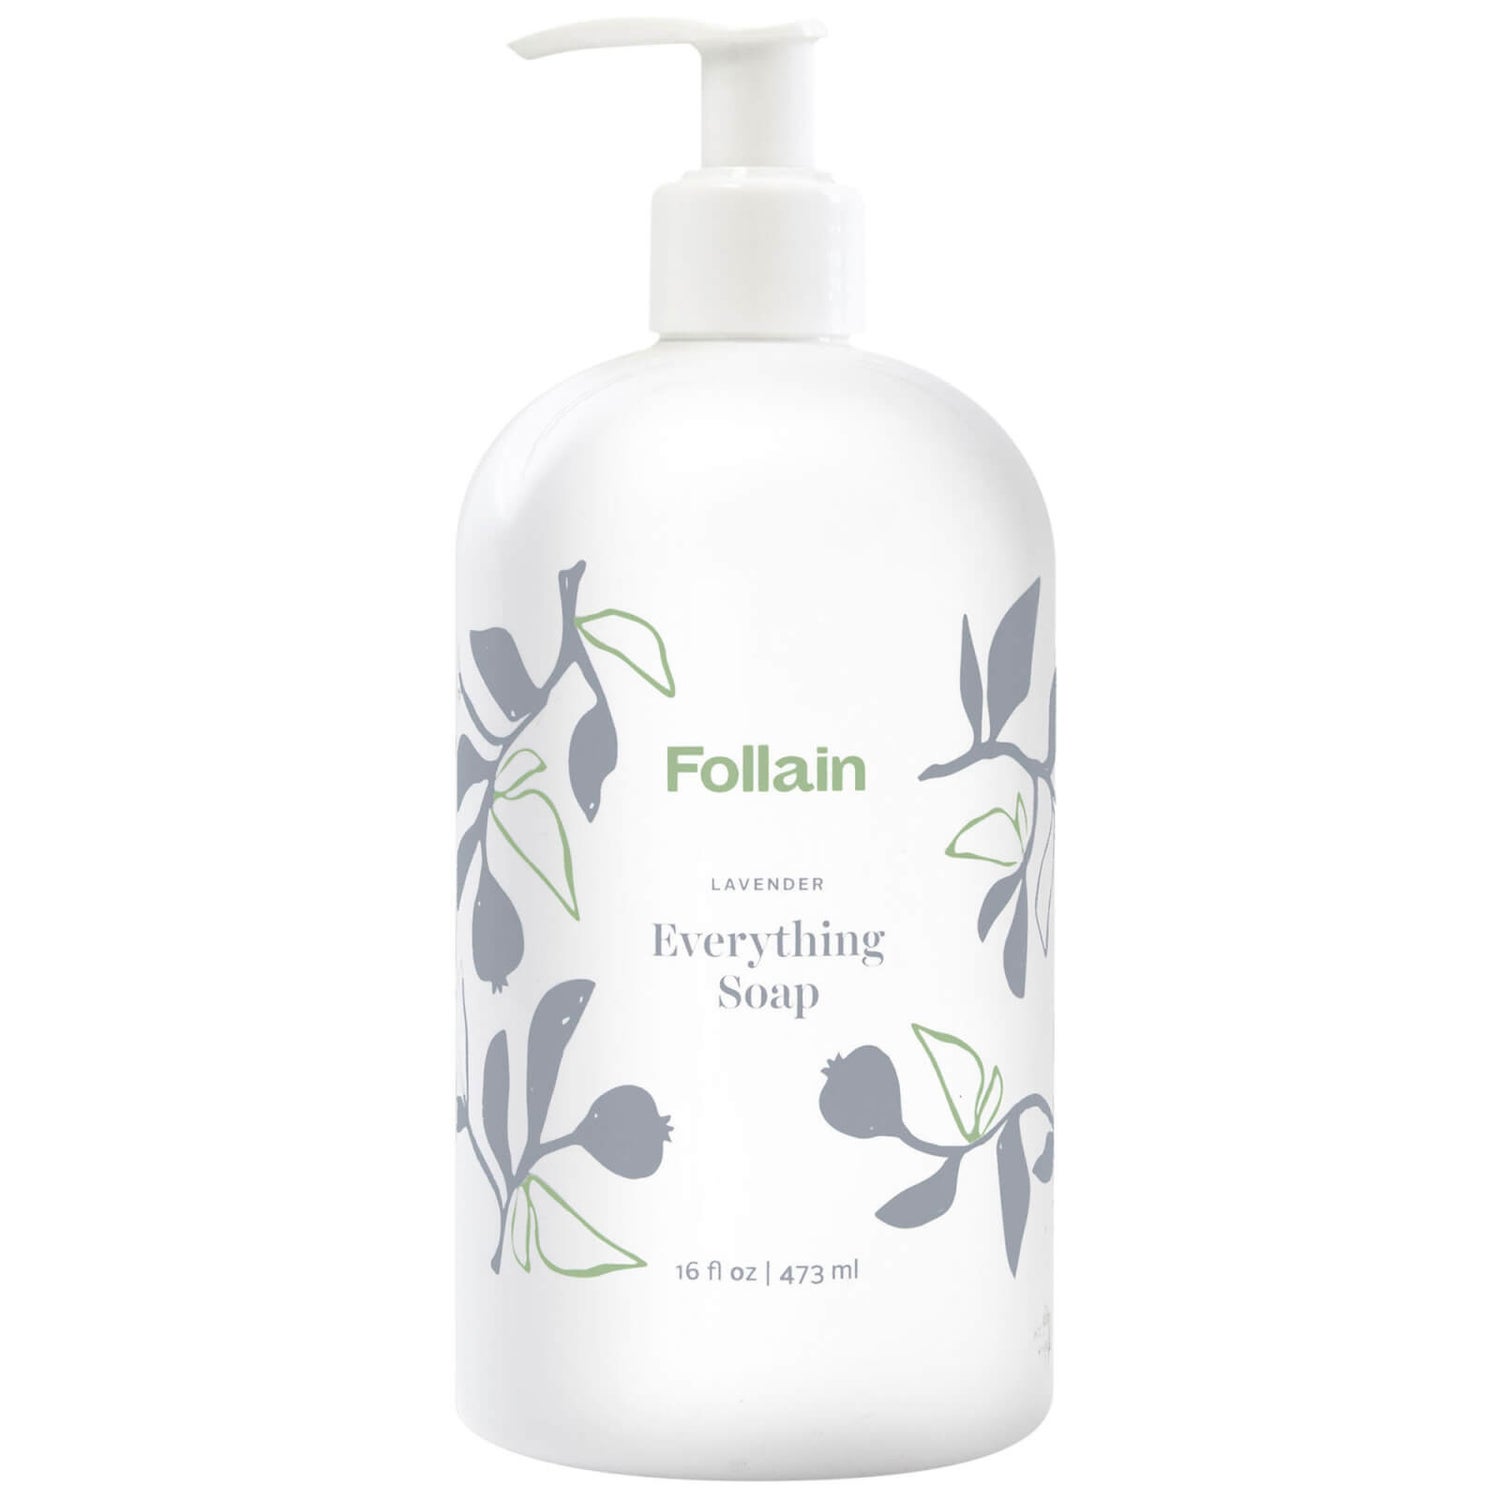 Follain Everything Soap- Lavender 16 oz